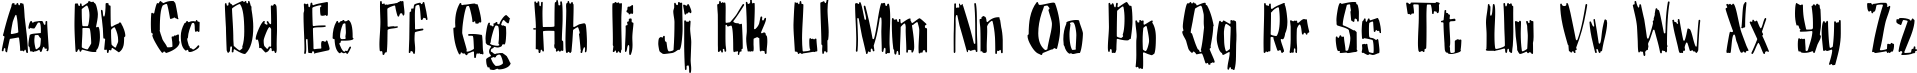 Пример написания английского алфавита шрифтом Motrhead Grotesk